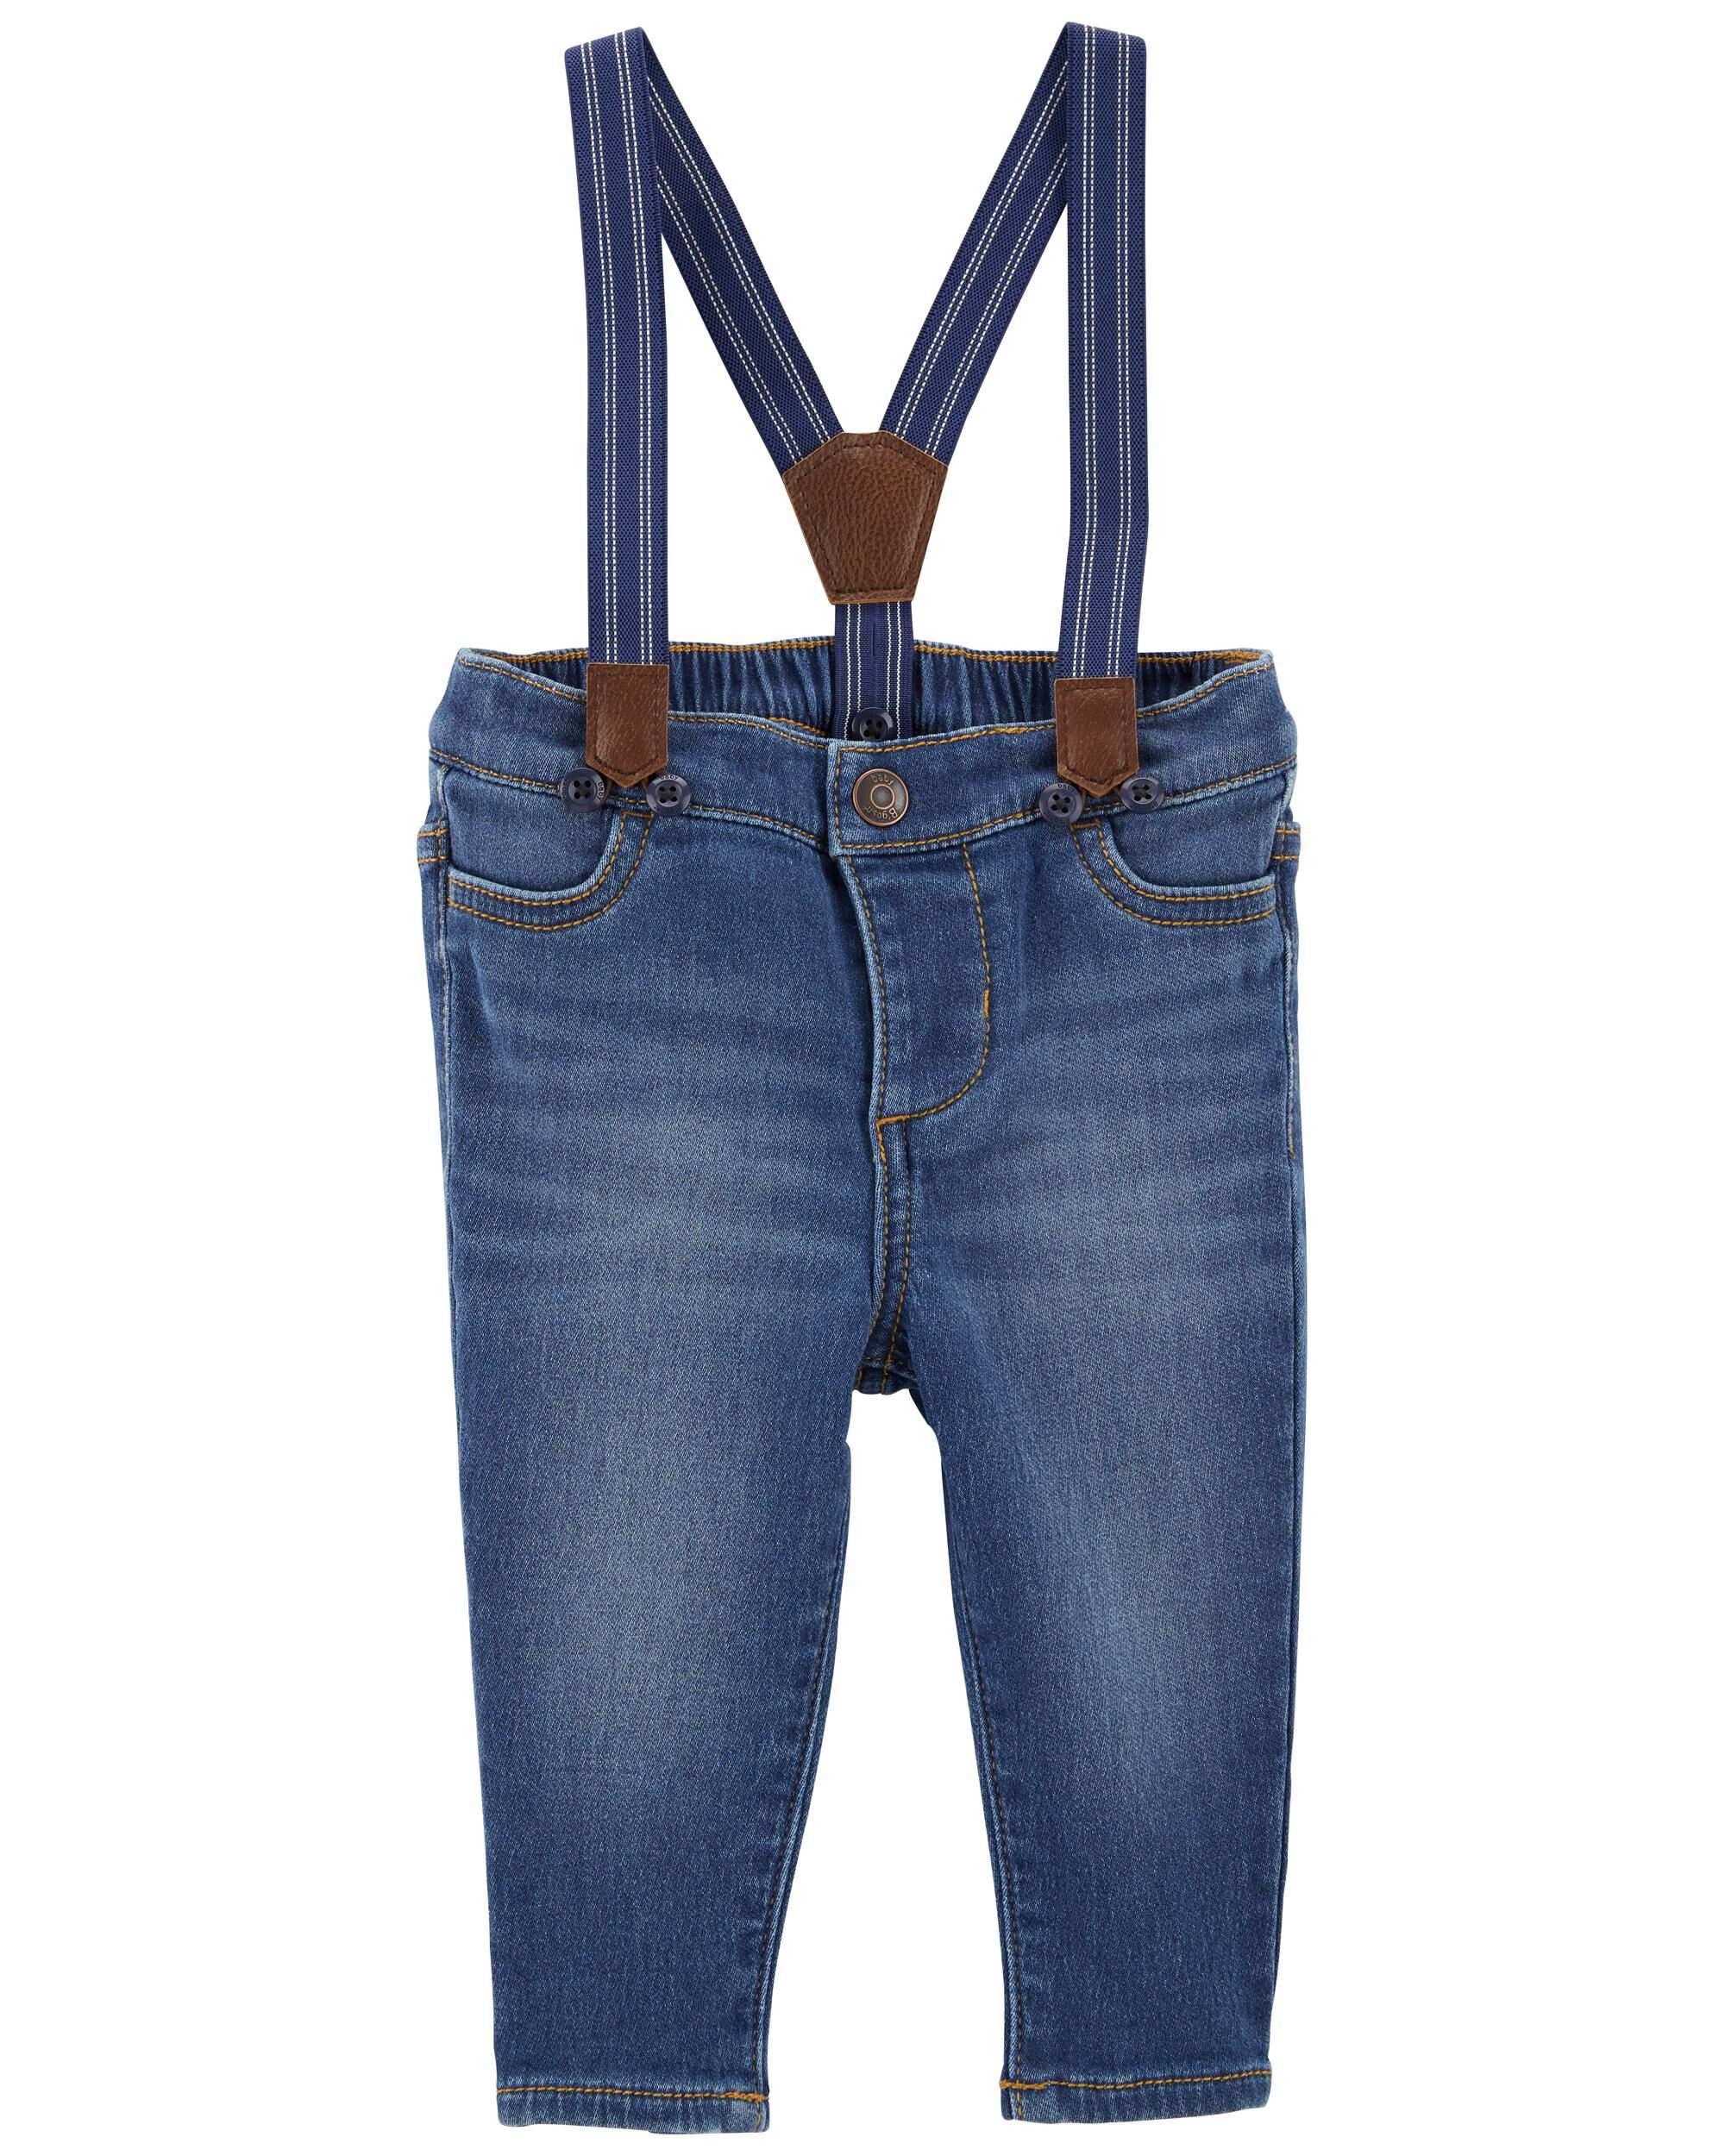 2PCS Toddler Baby Boy Outfit Shirt Tops+Denim pants Jeans Kids Clothes Set  | eBay